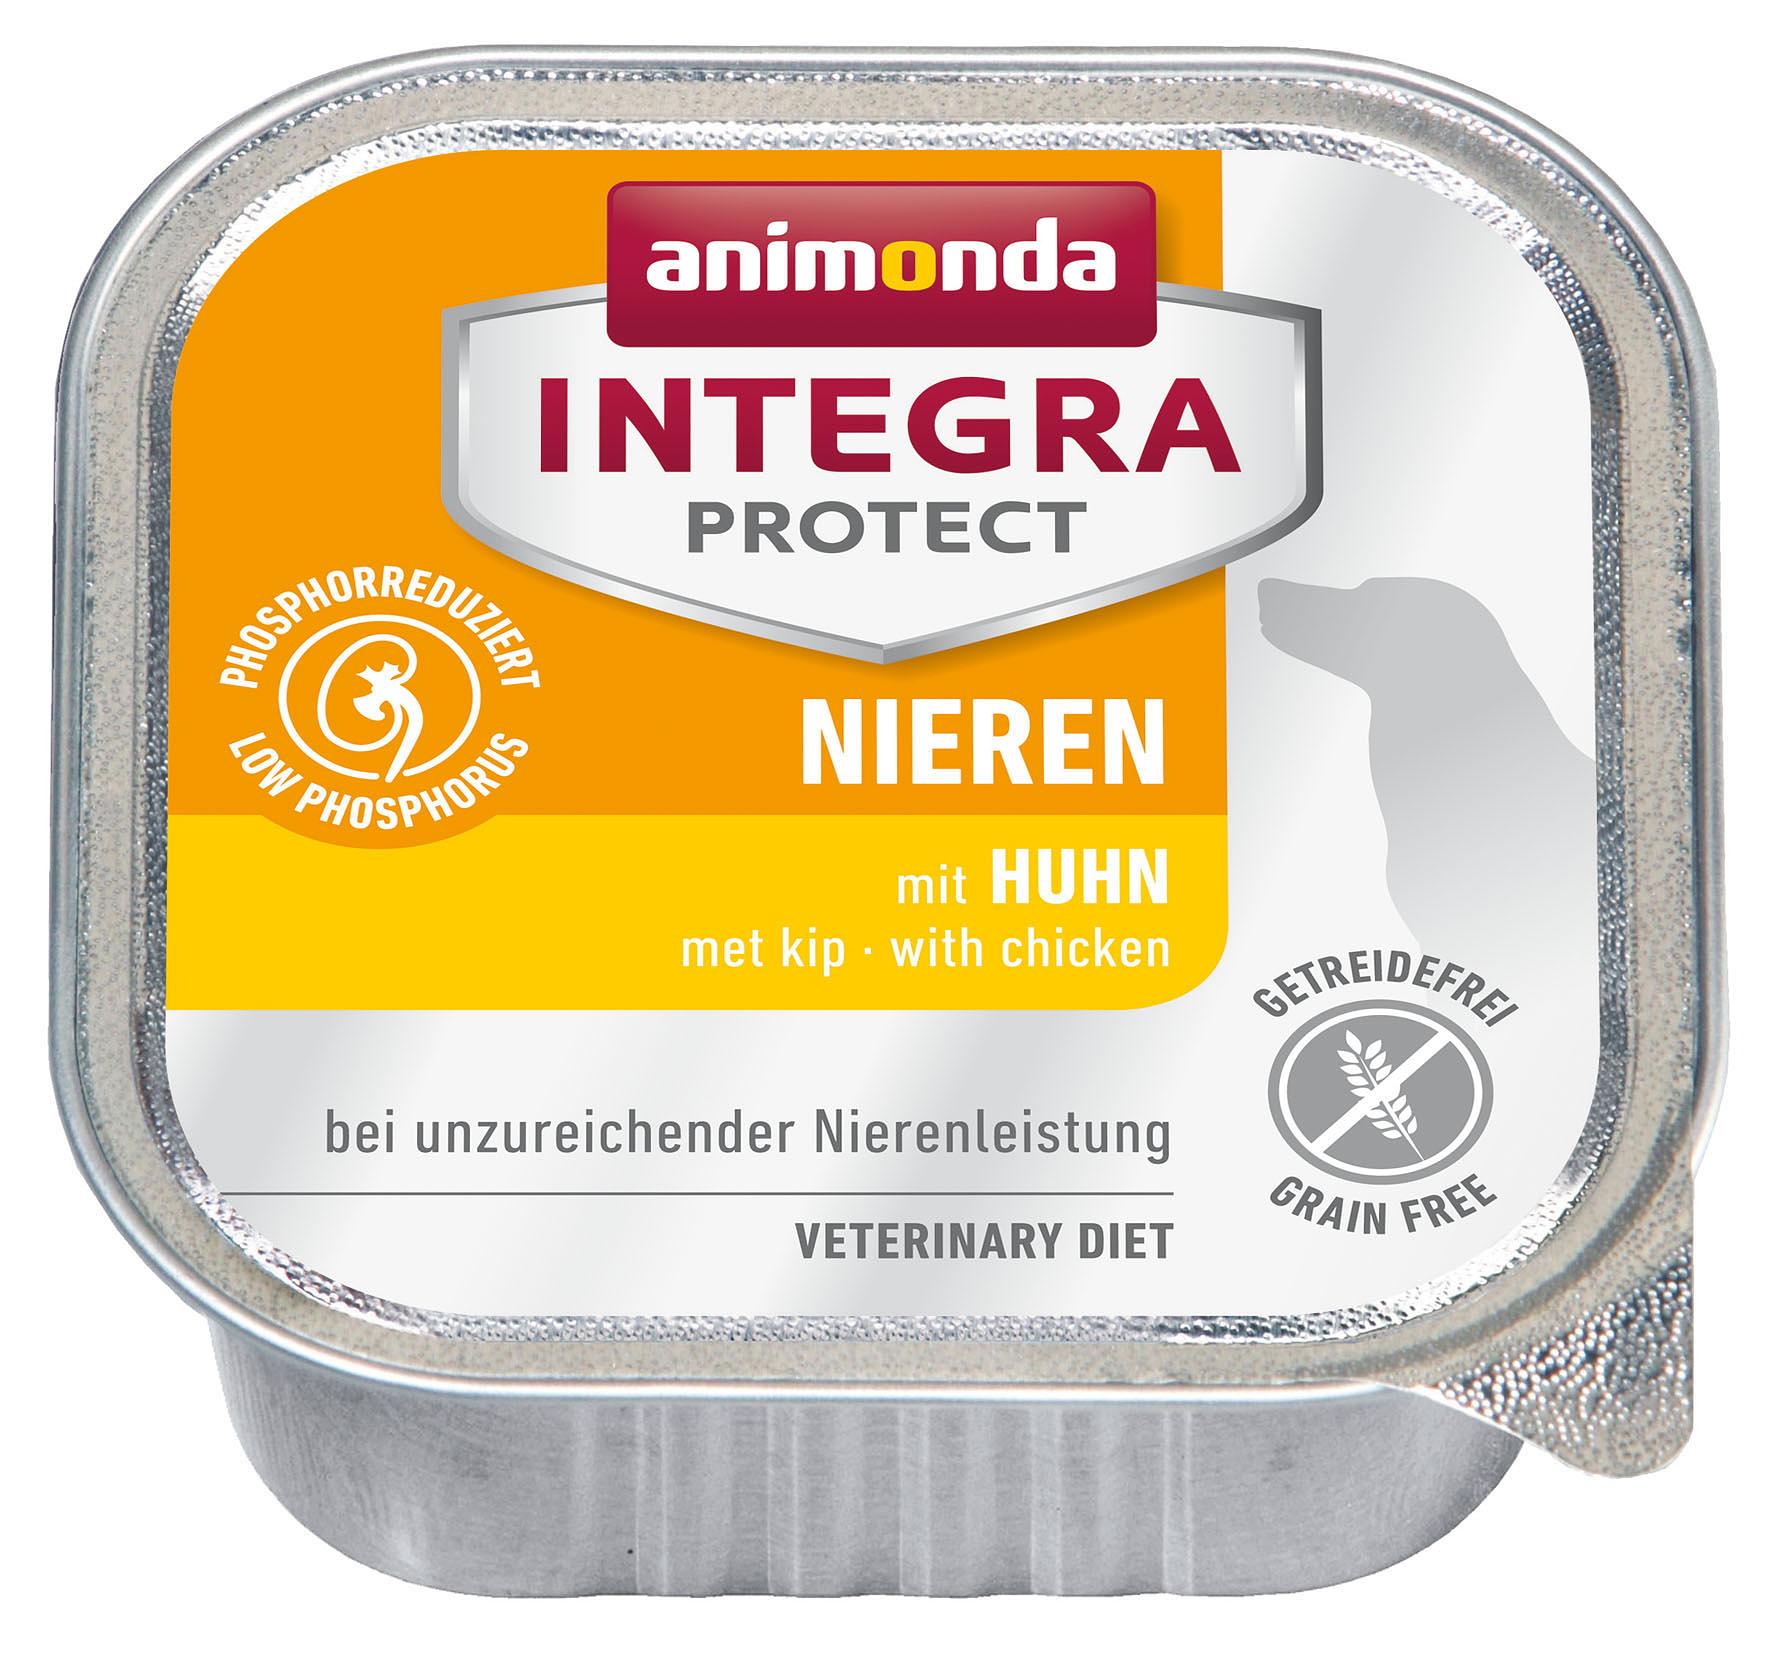 animonda Integra Protect, Nieren